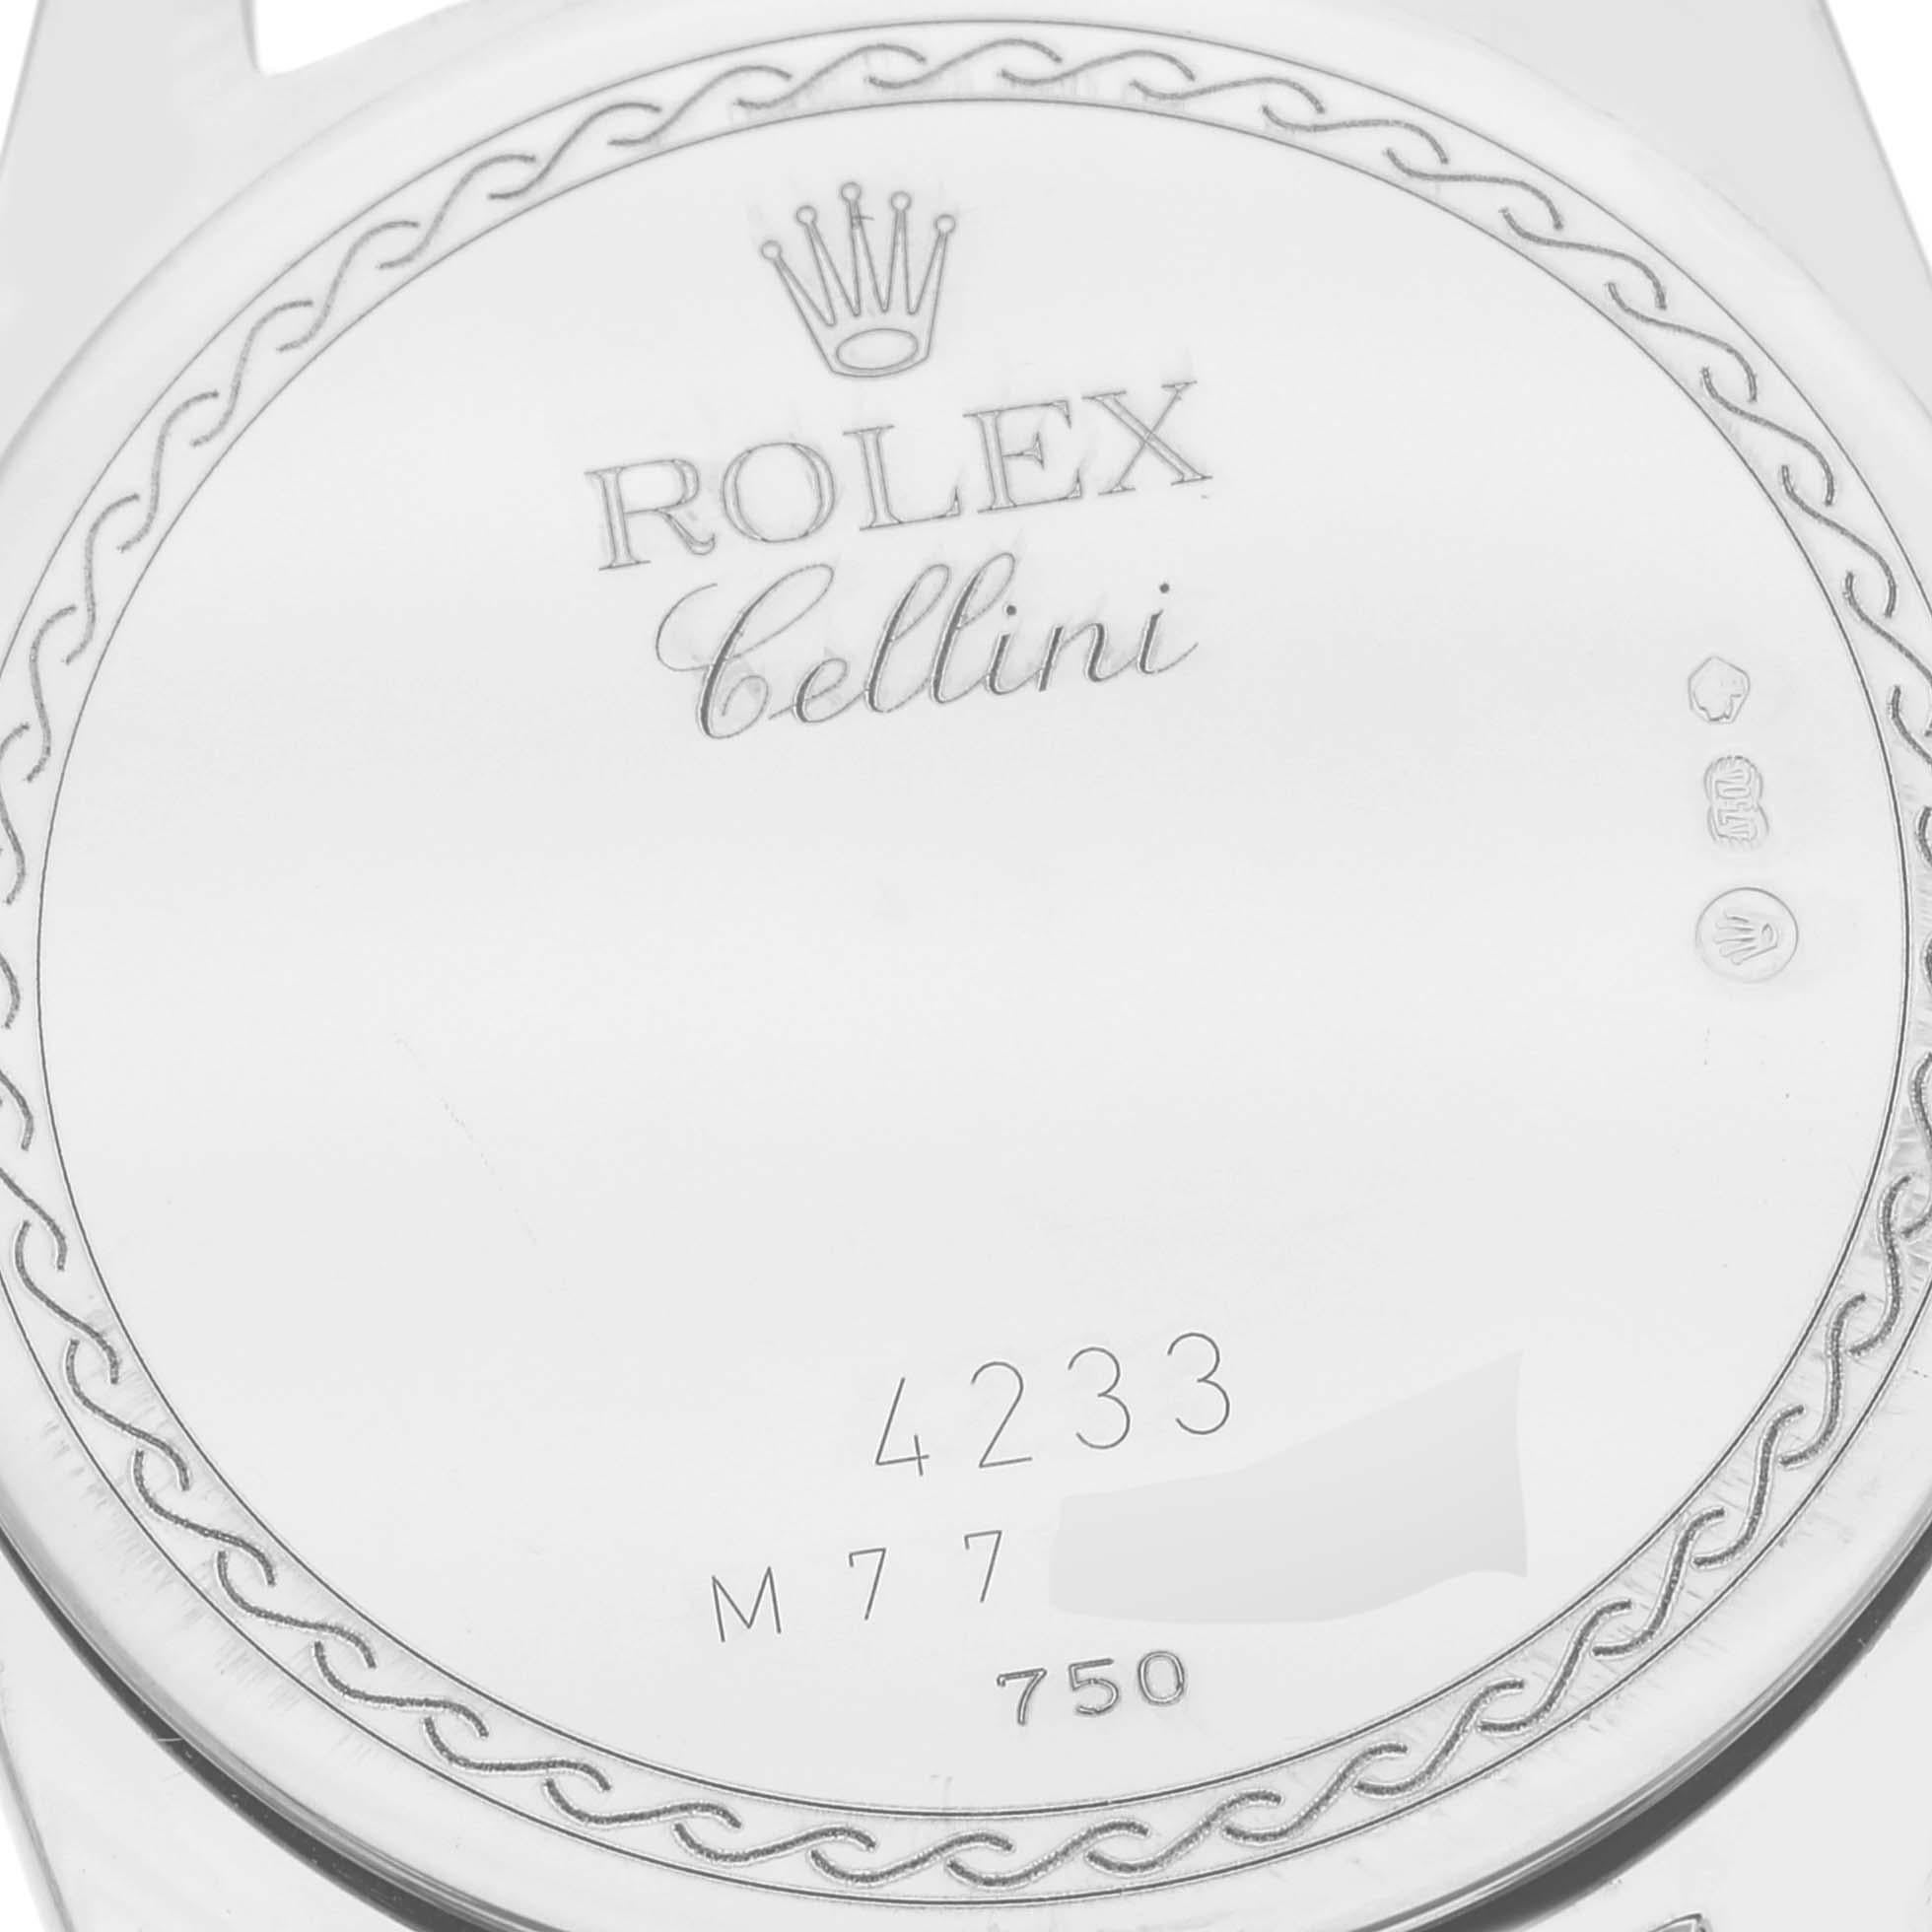 Rolex Cellini Danaos White Rose Gold Black Dial Mens Watch 4233 Box Card 2